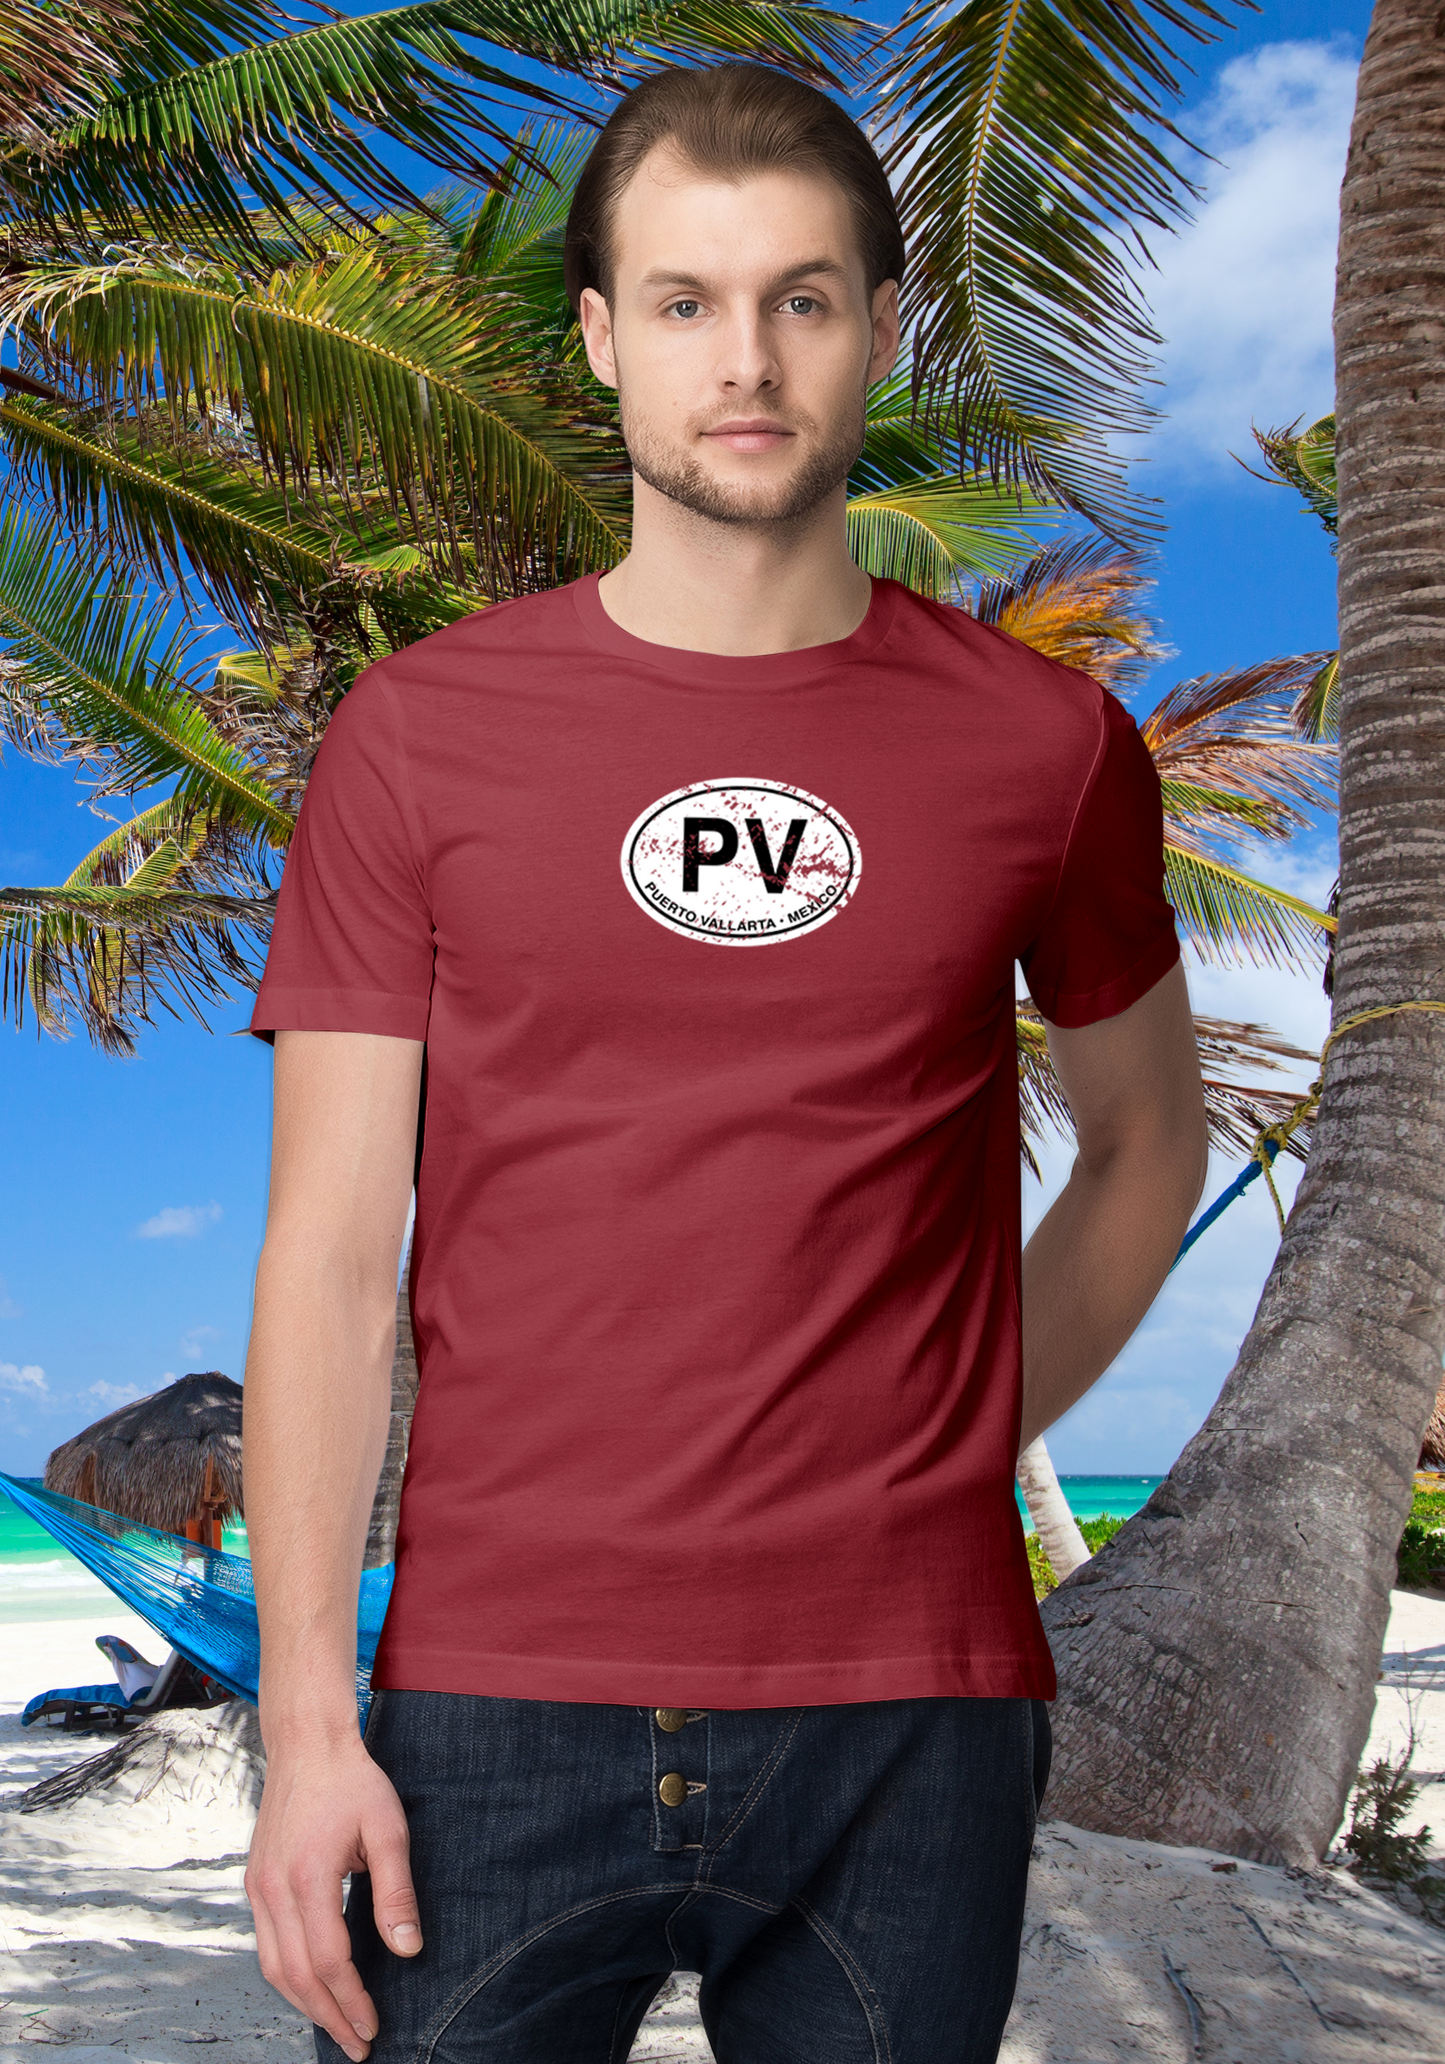 Puerto Vallarta Men's Classic T-Shirt Souvenirs - My Destination Location